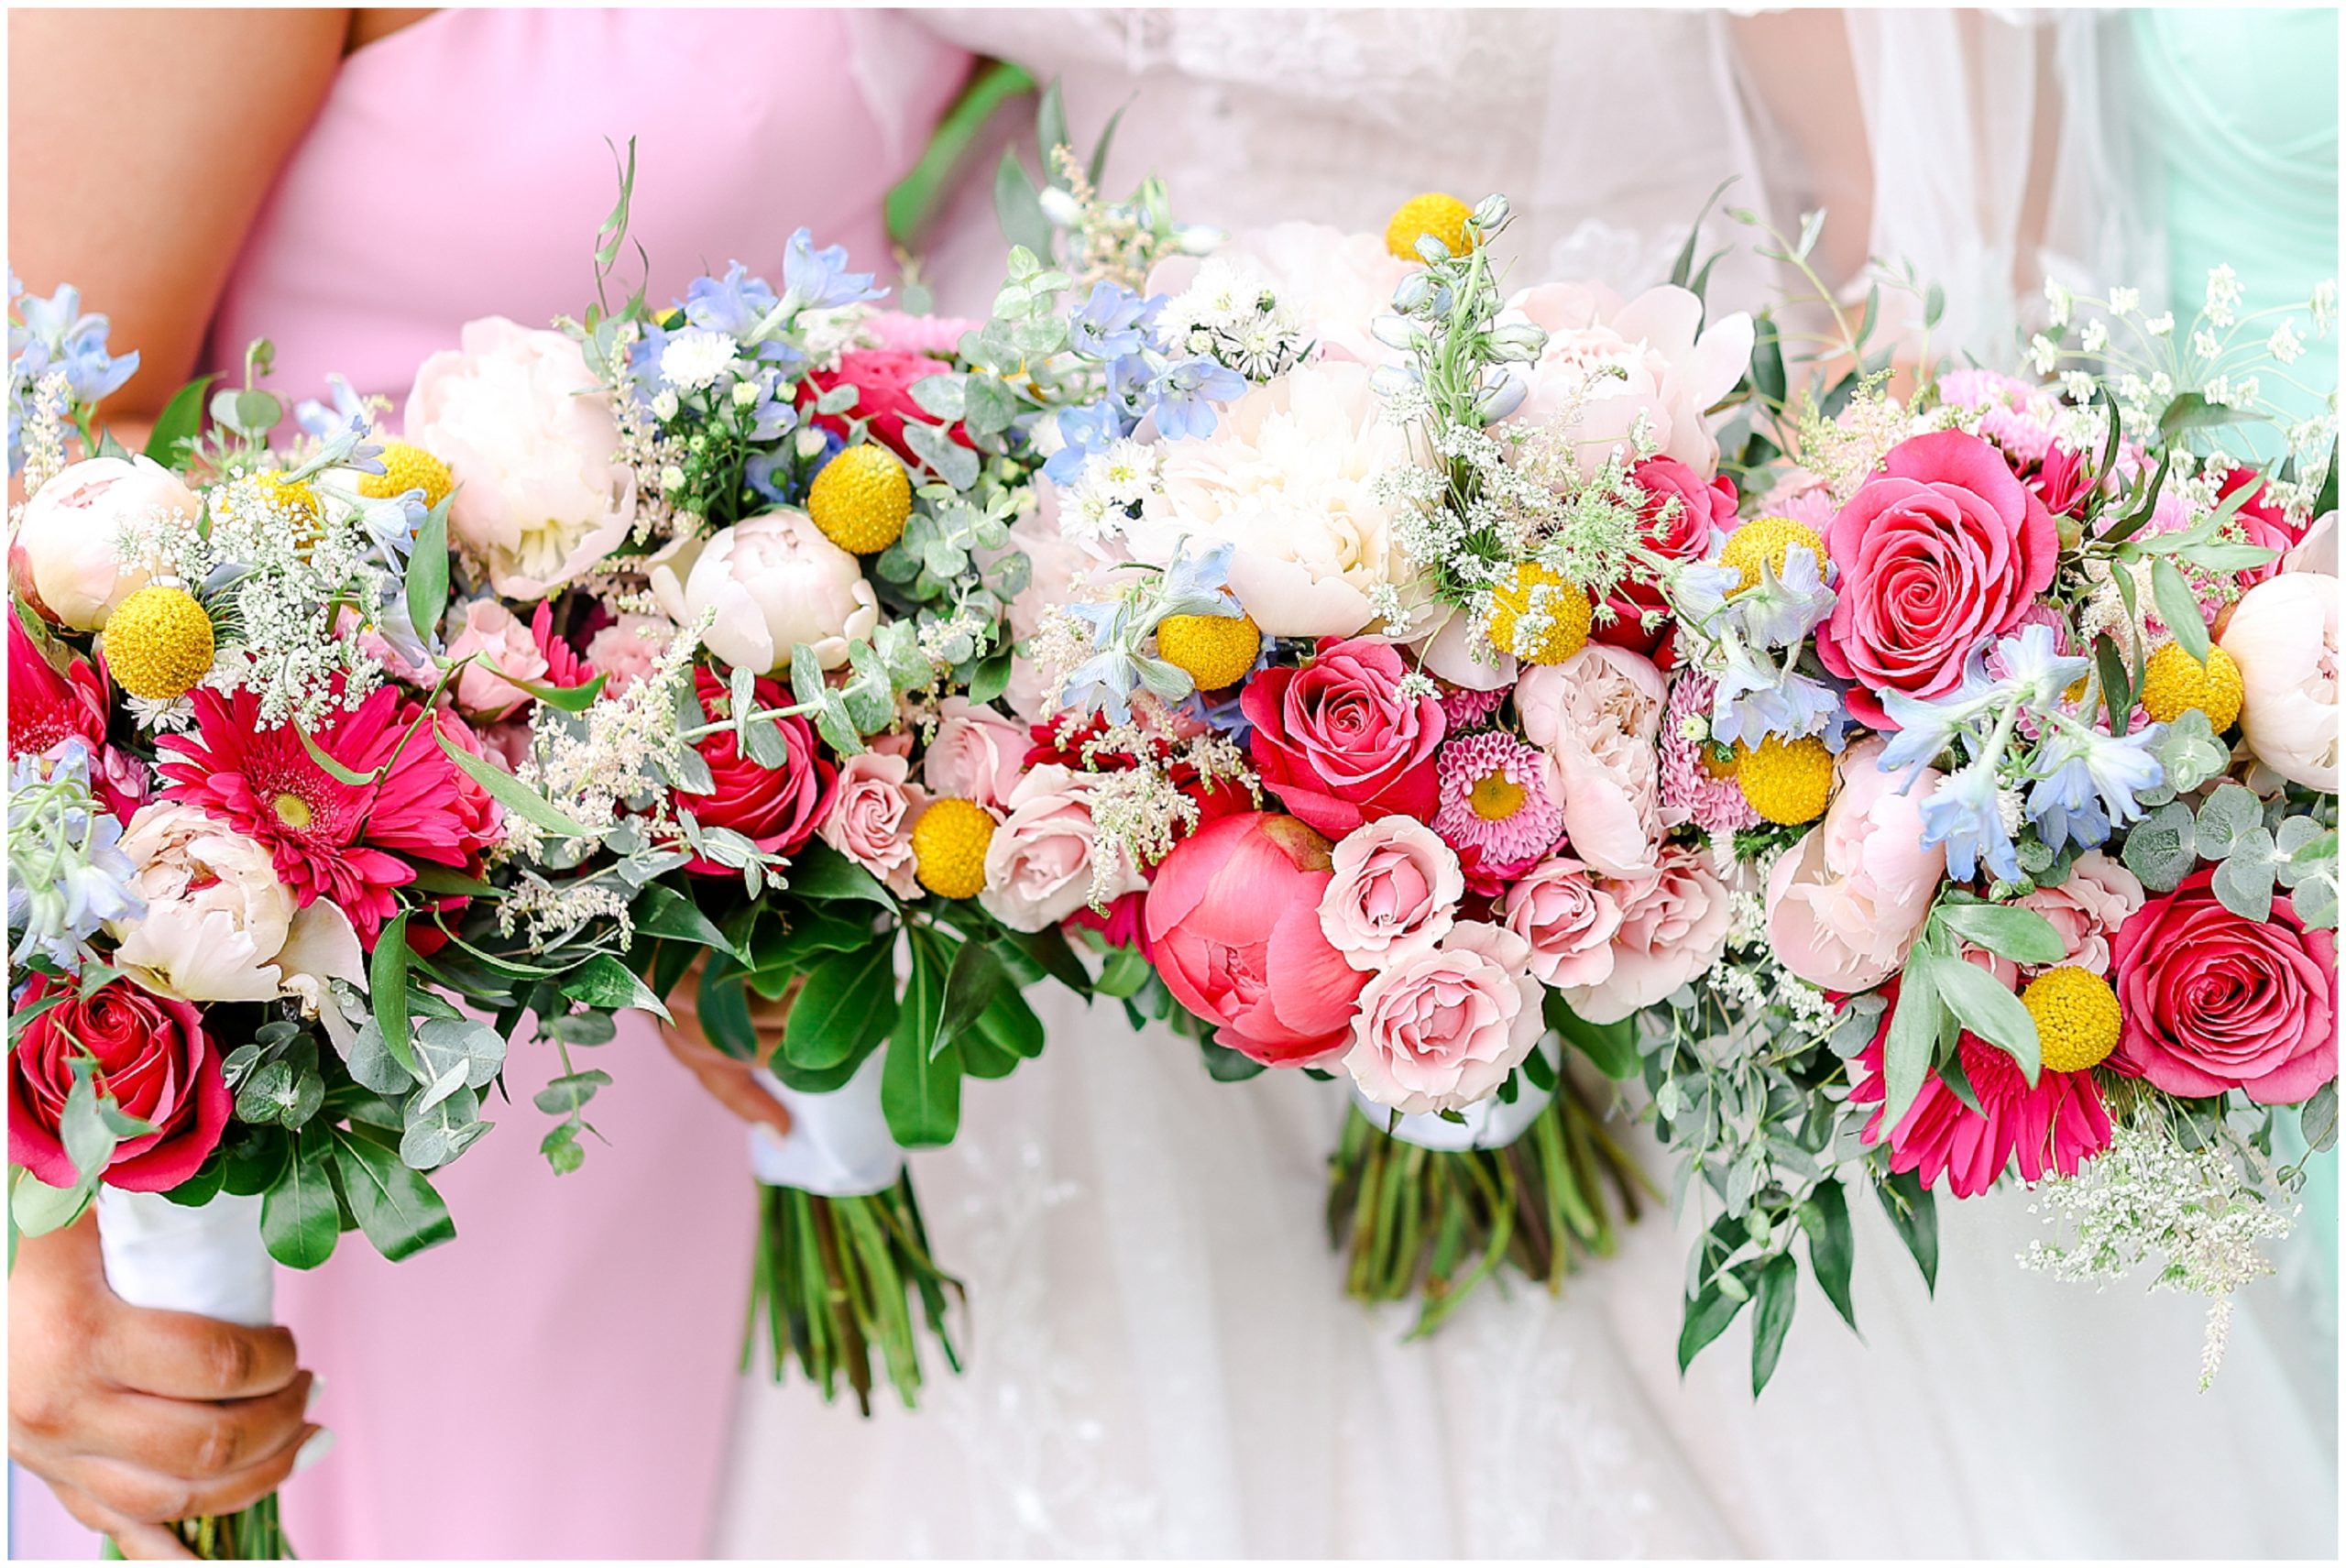 Colorful and Joyful Wedding Photography - Kansas City Wedding Photographer - The Rhapsody  - colorful wedding flowers - wedding bouquet 